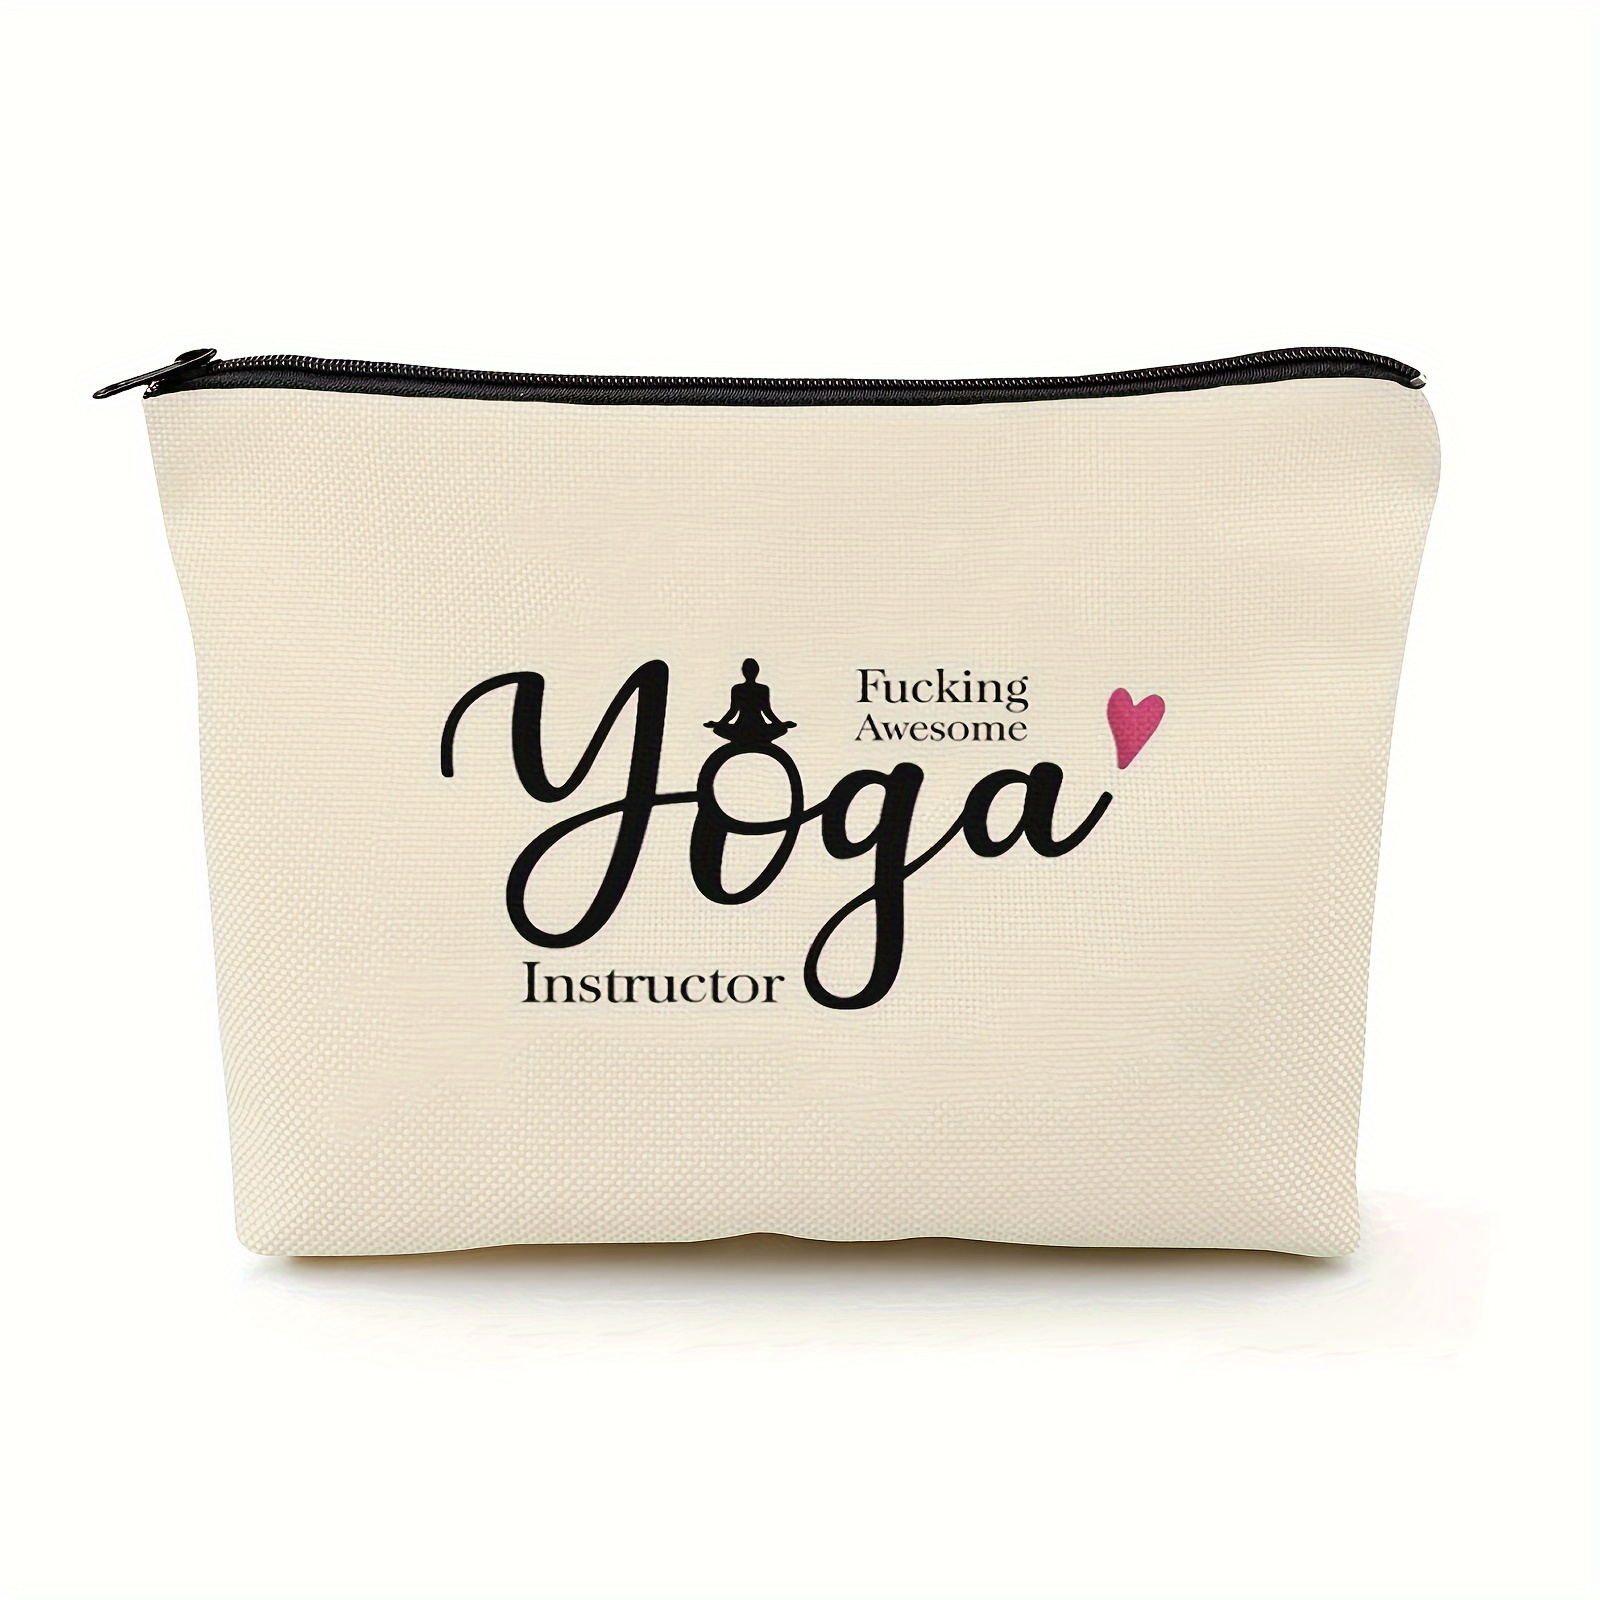 Yoga Poses T-shirt / Yoga Gift for Women / Yogi Gift / Woman's Men's GYM  Exercise Top 